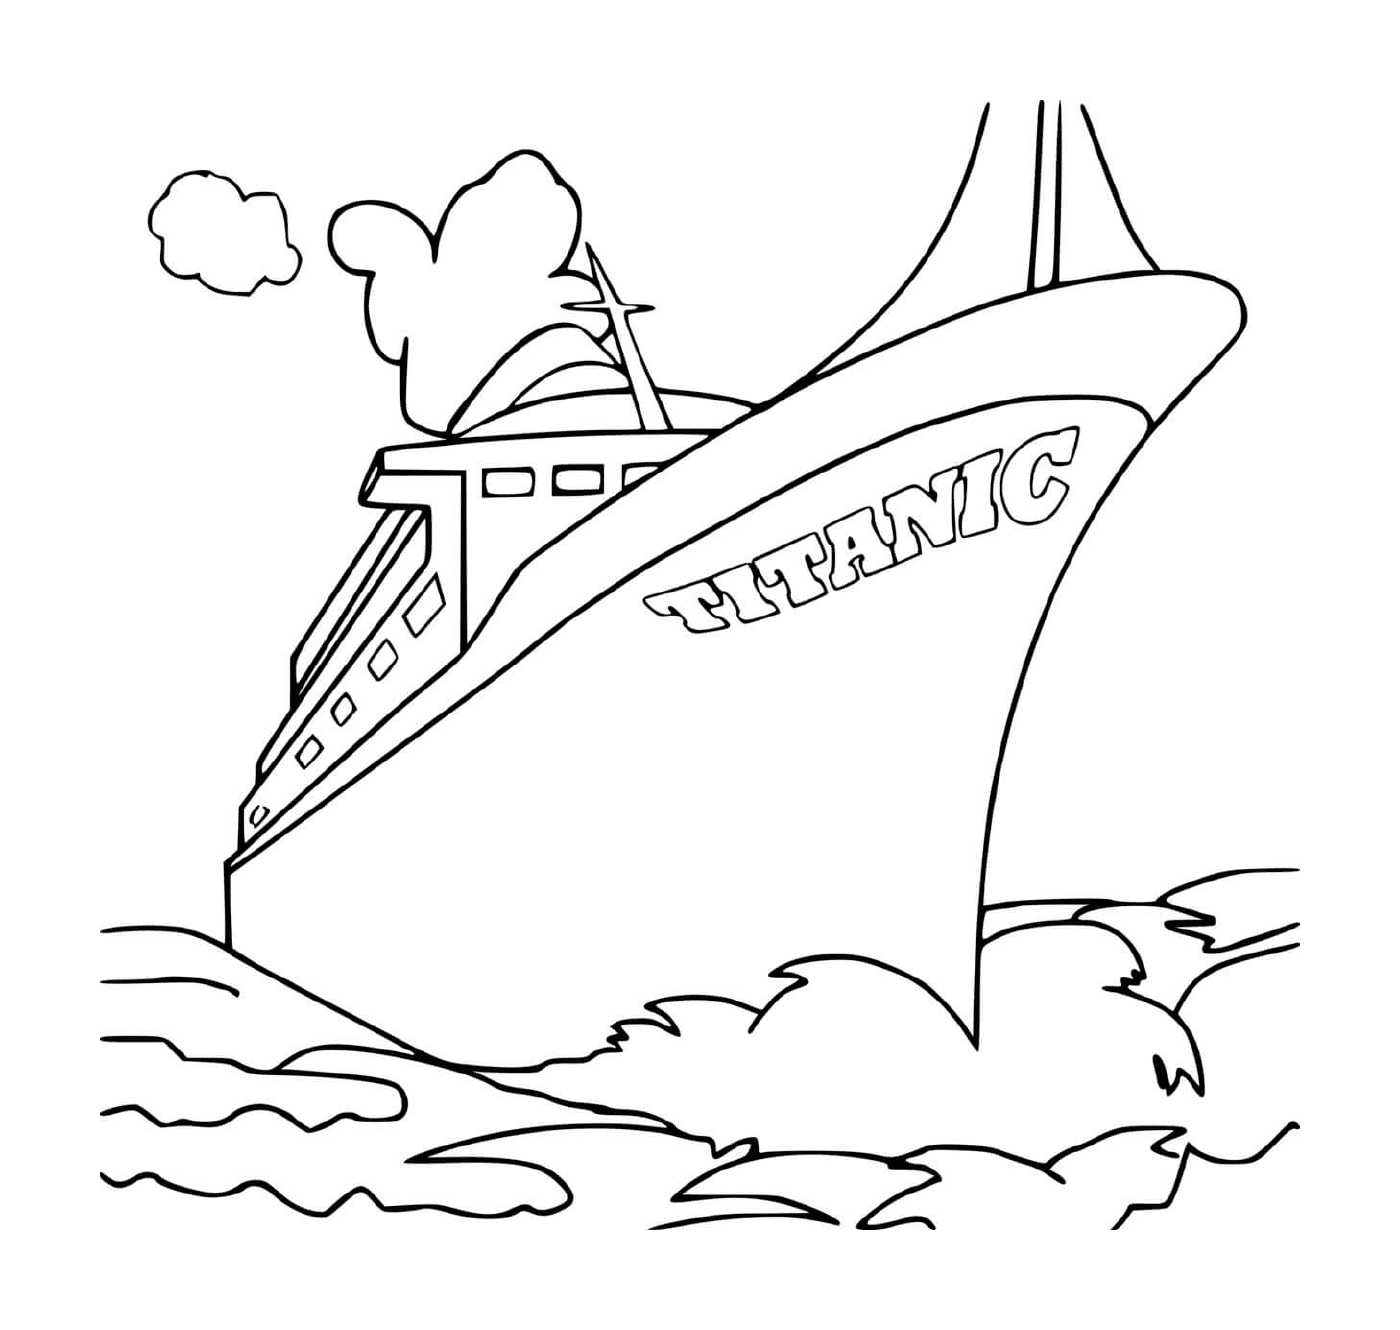  Лодка со словом Титаник 